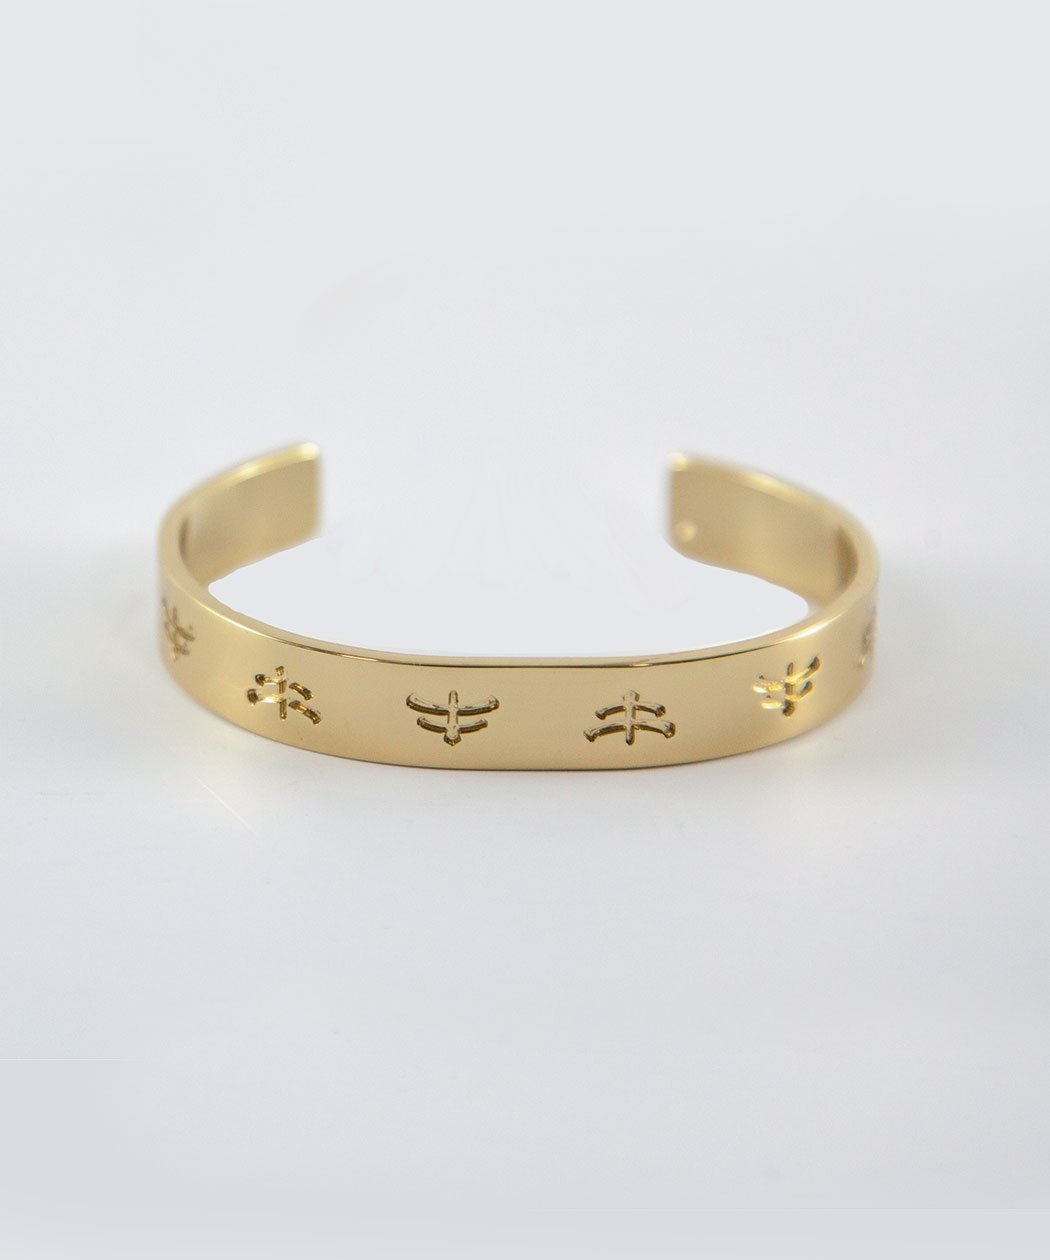 Temple brass bracelet